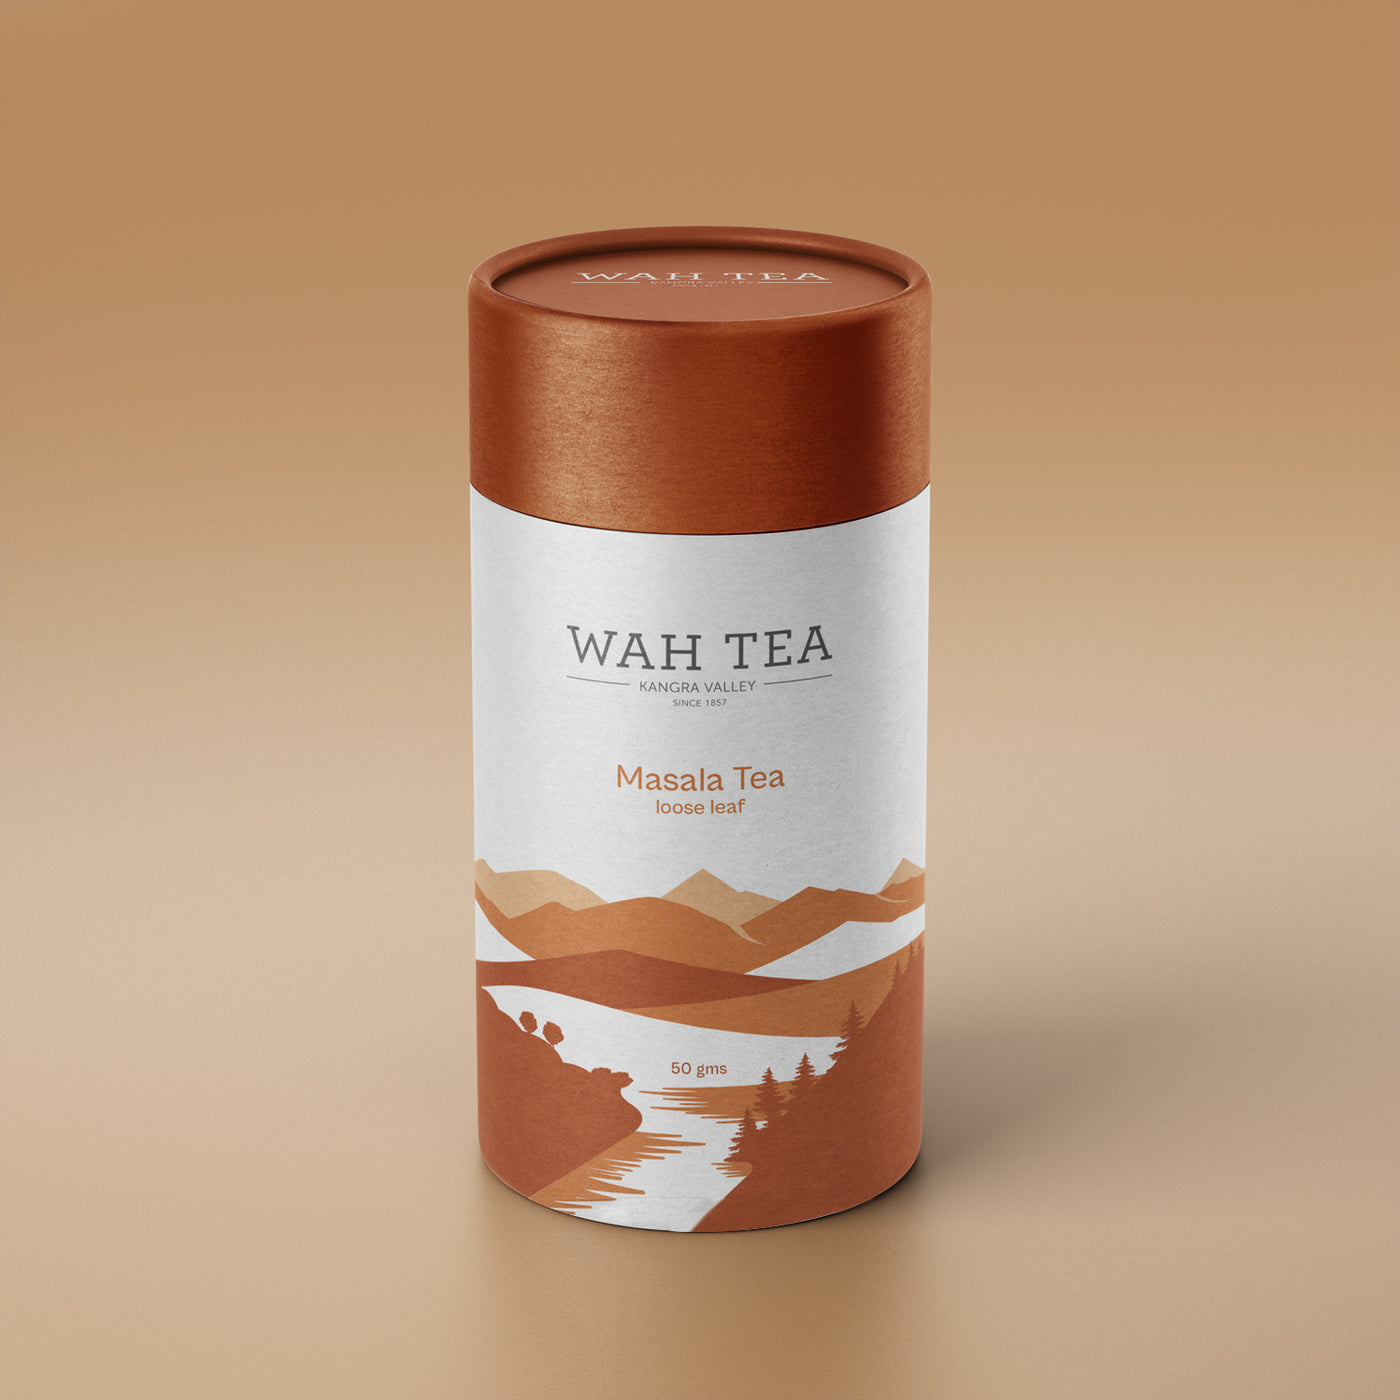 Masala Tea - Loose Leaf - Tube Pack of 2 (50g each)